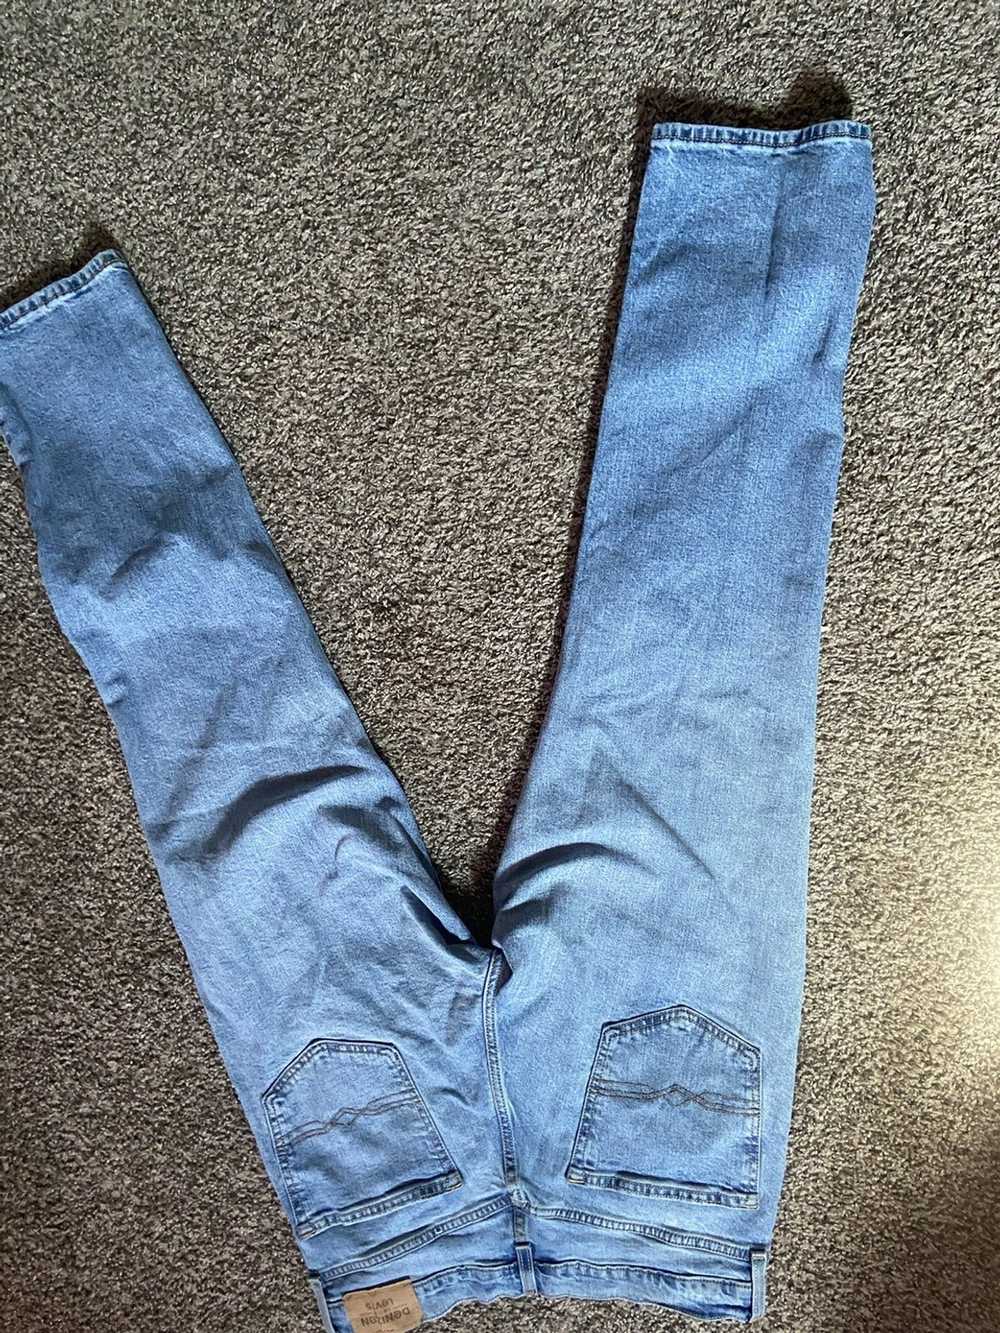 Levi's Levi’s denims washed jeans - image 2